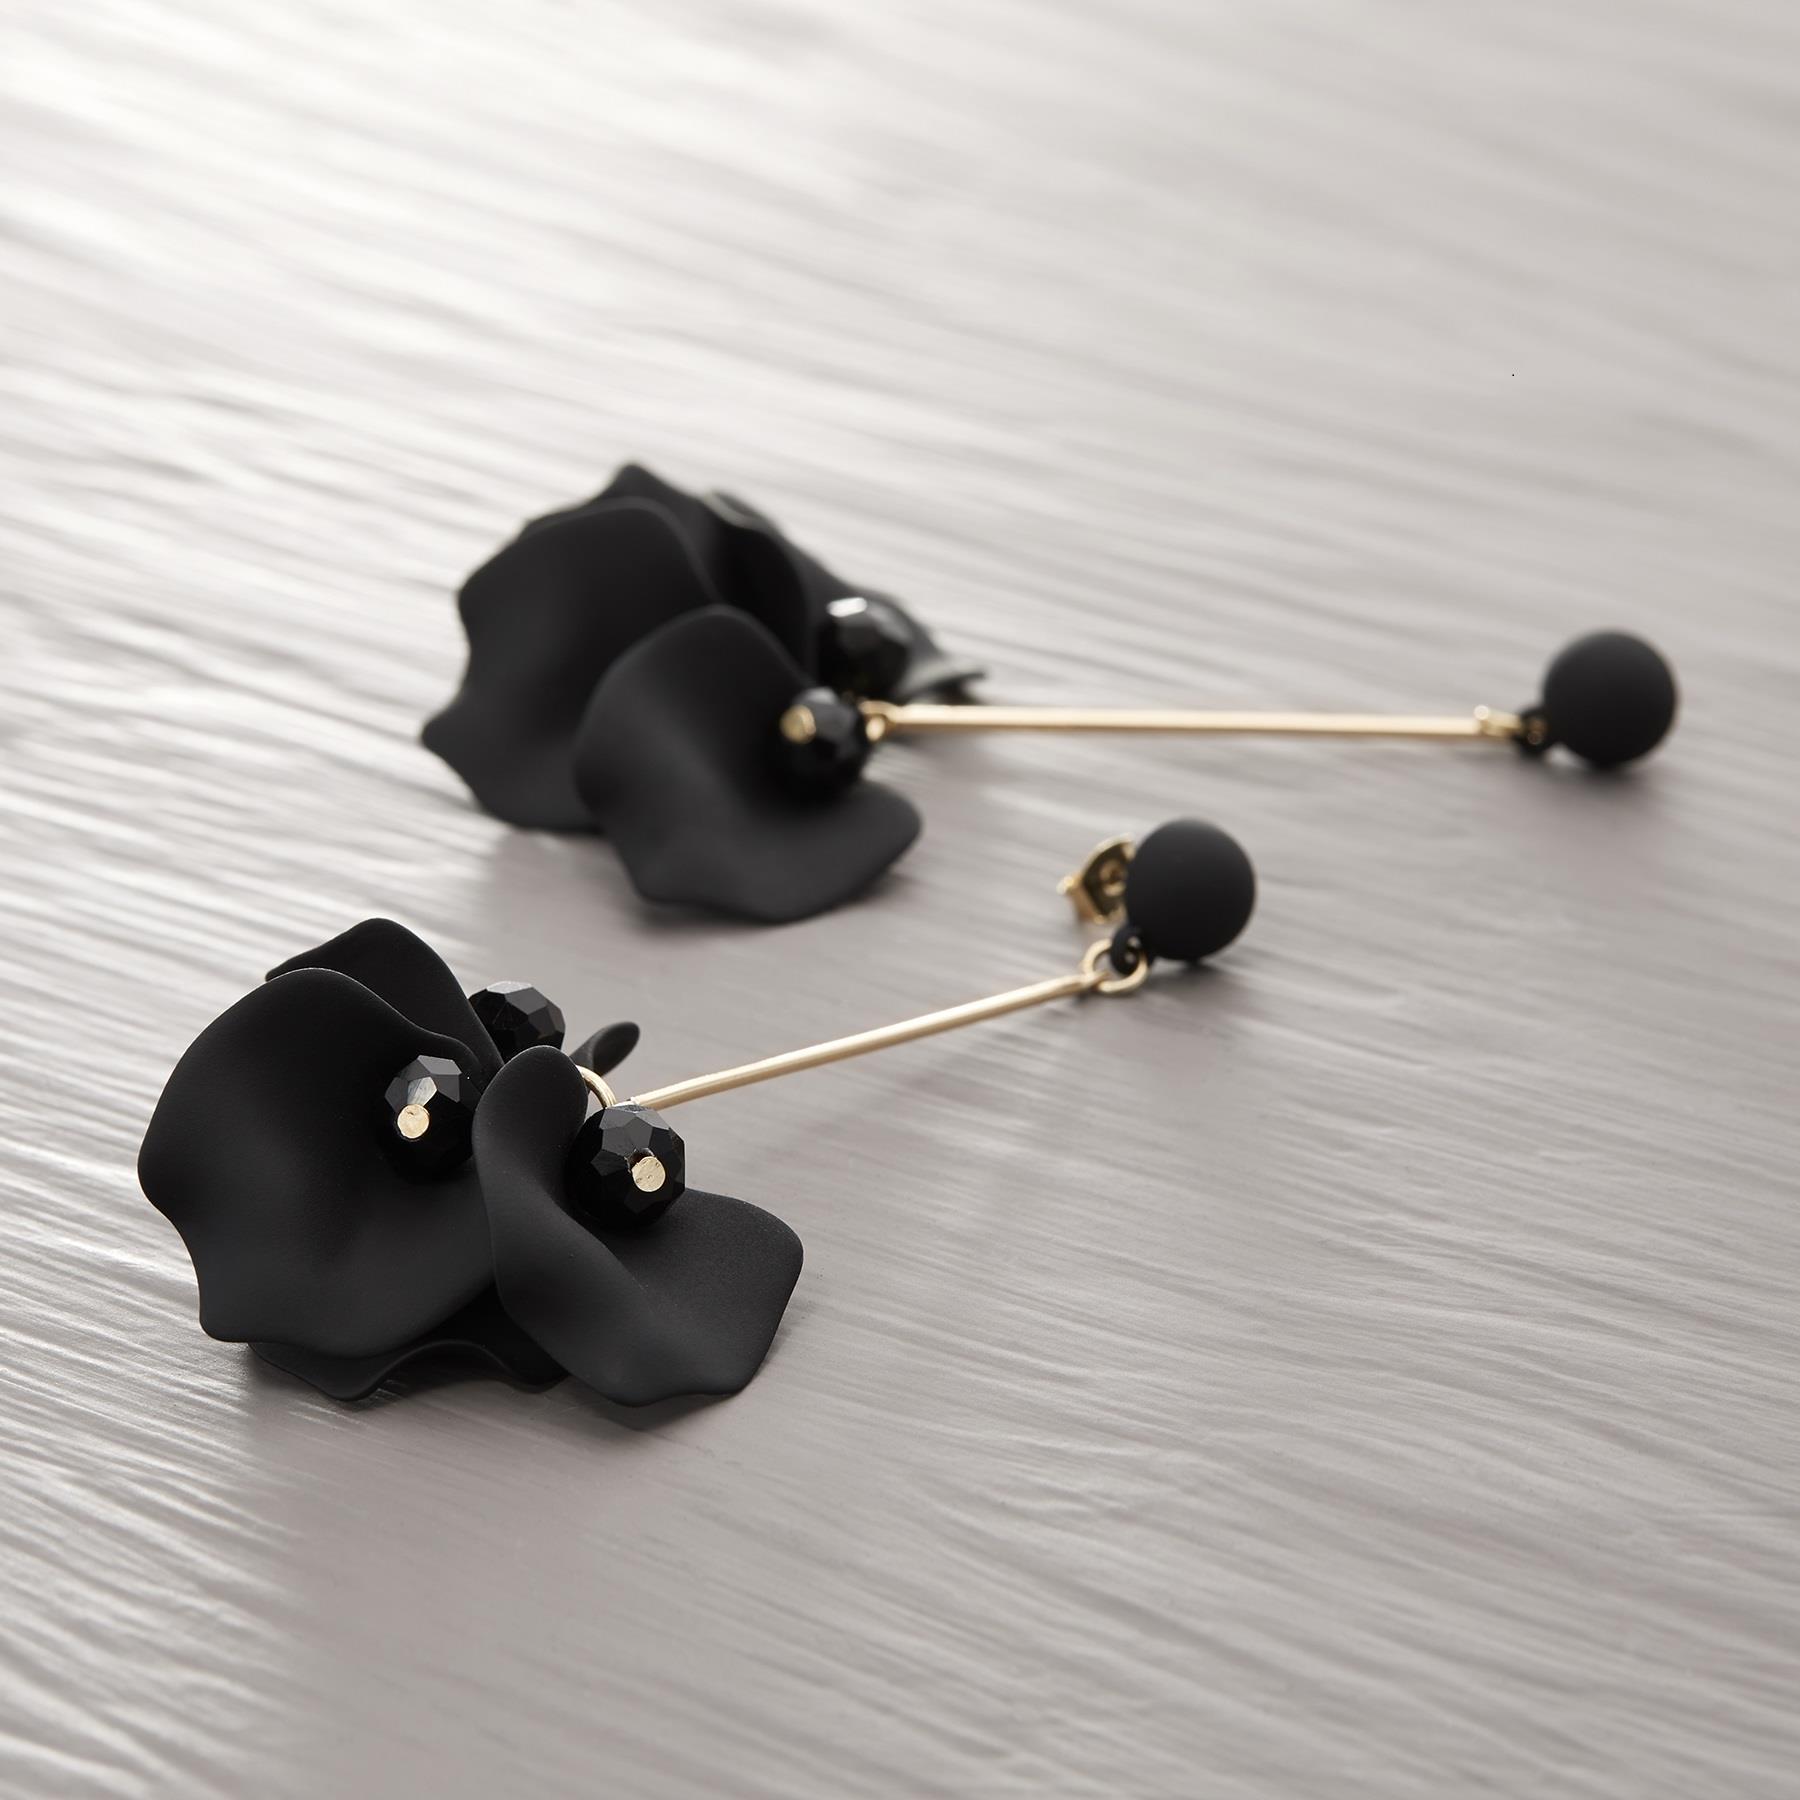 A MOMENT IN TIME. Black flower earrings